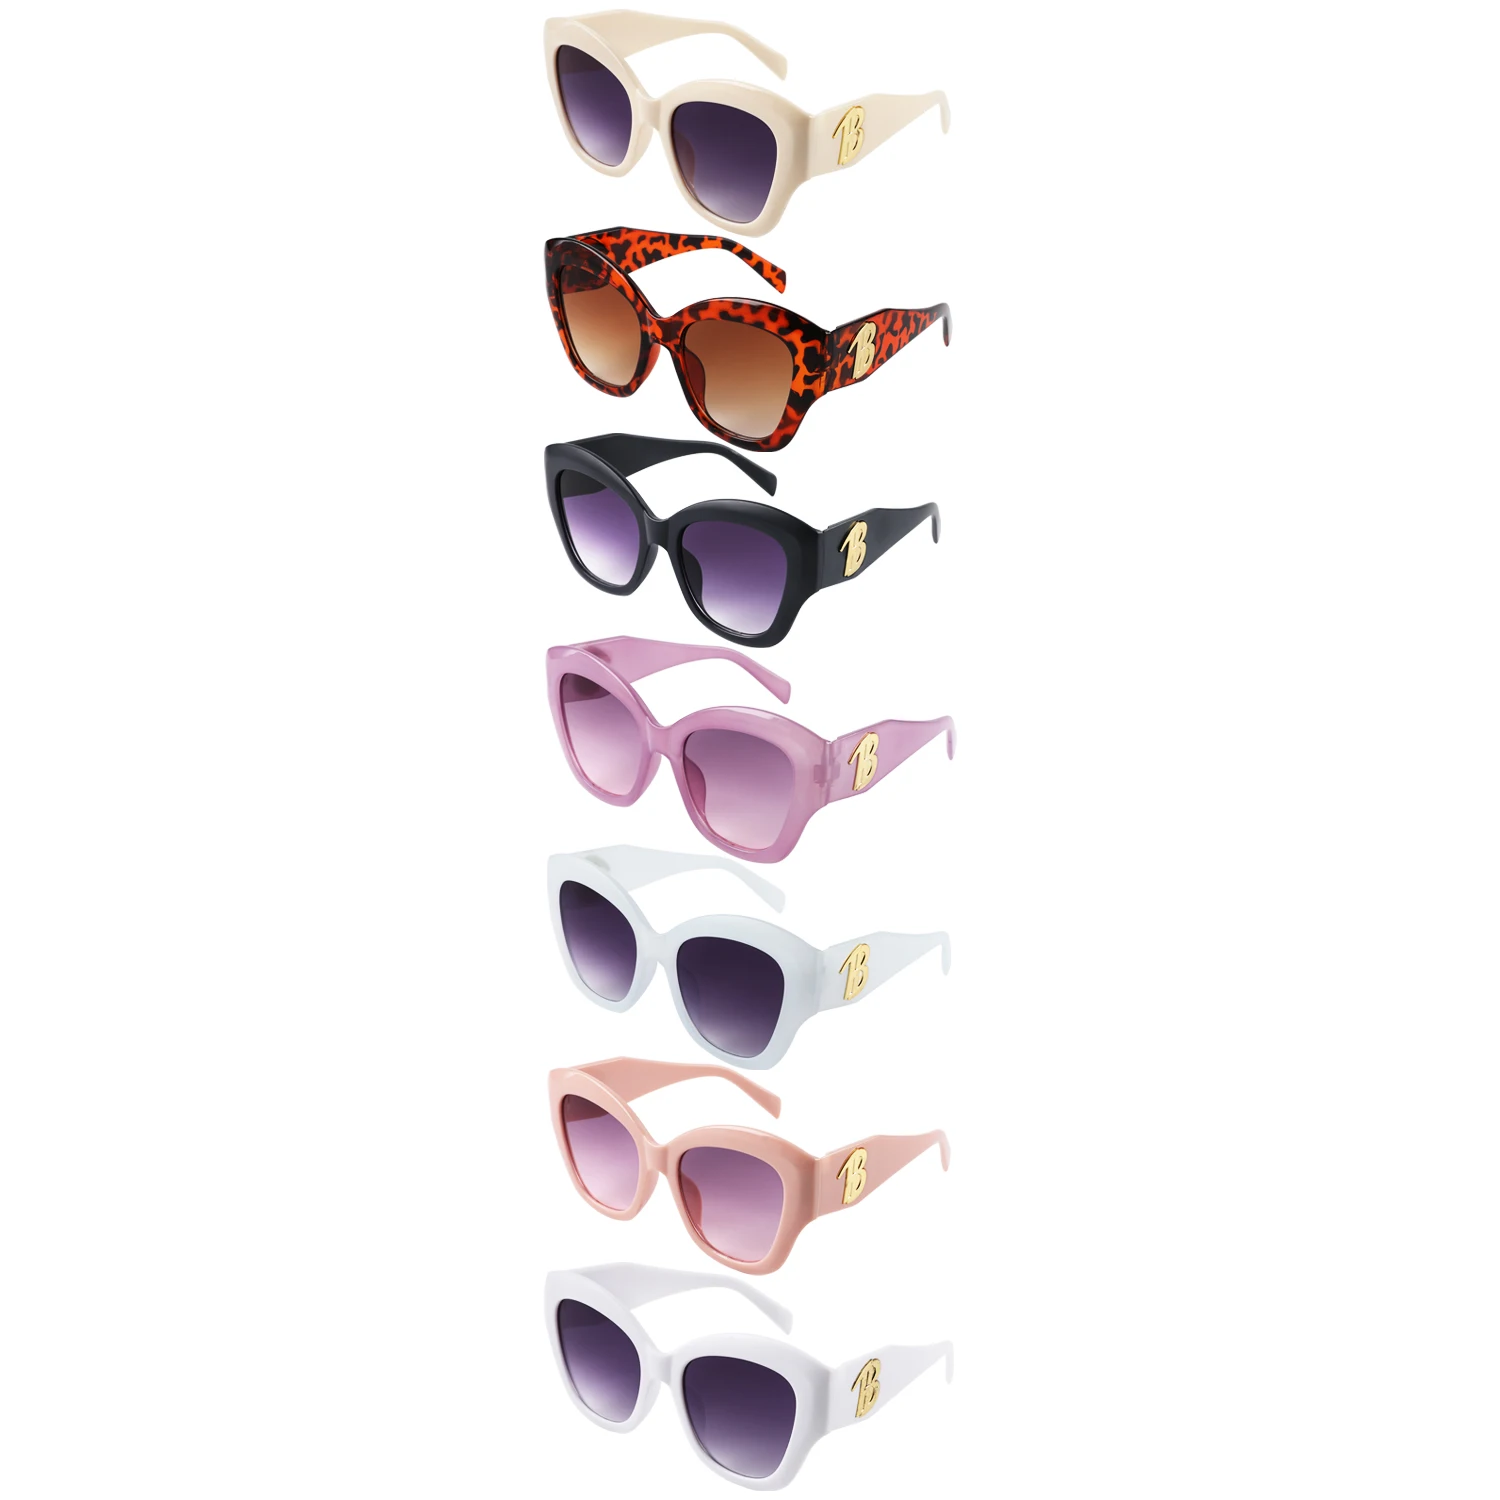 New Square Frame Sunglasses National Style Retro Trend Sunglasses ...